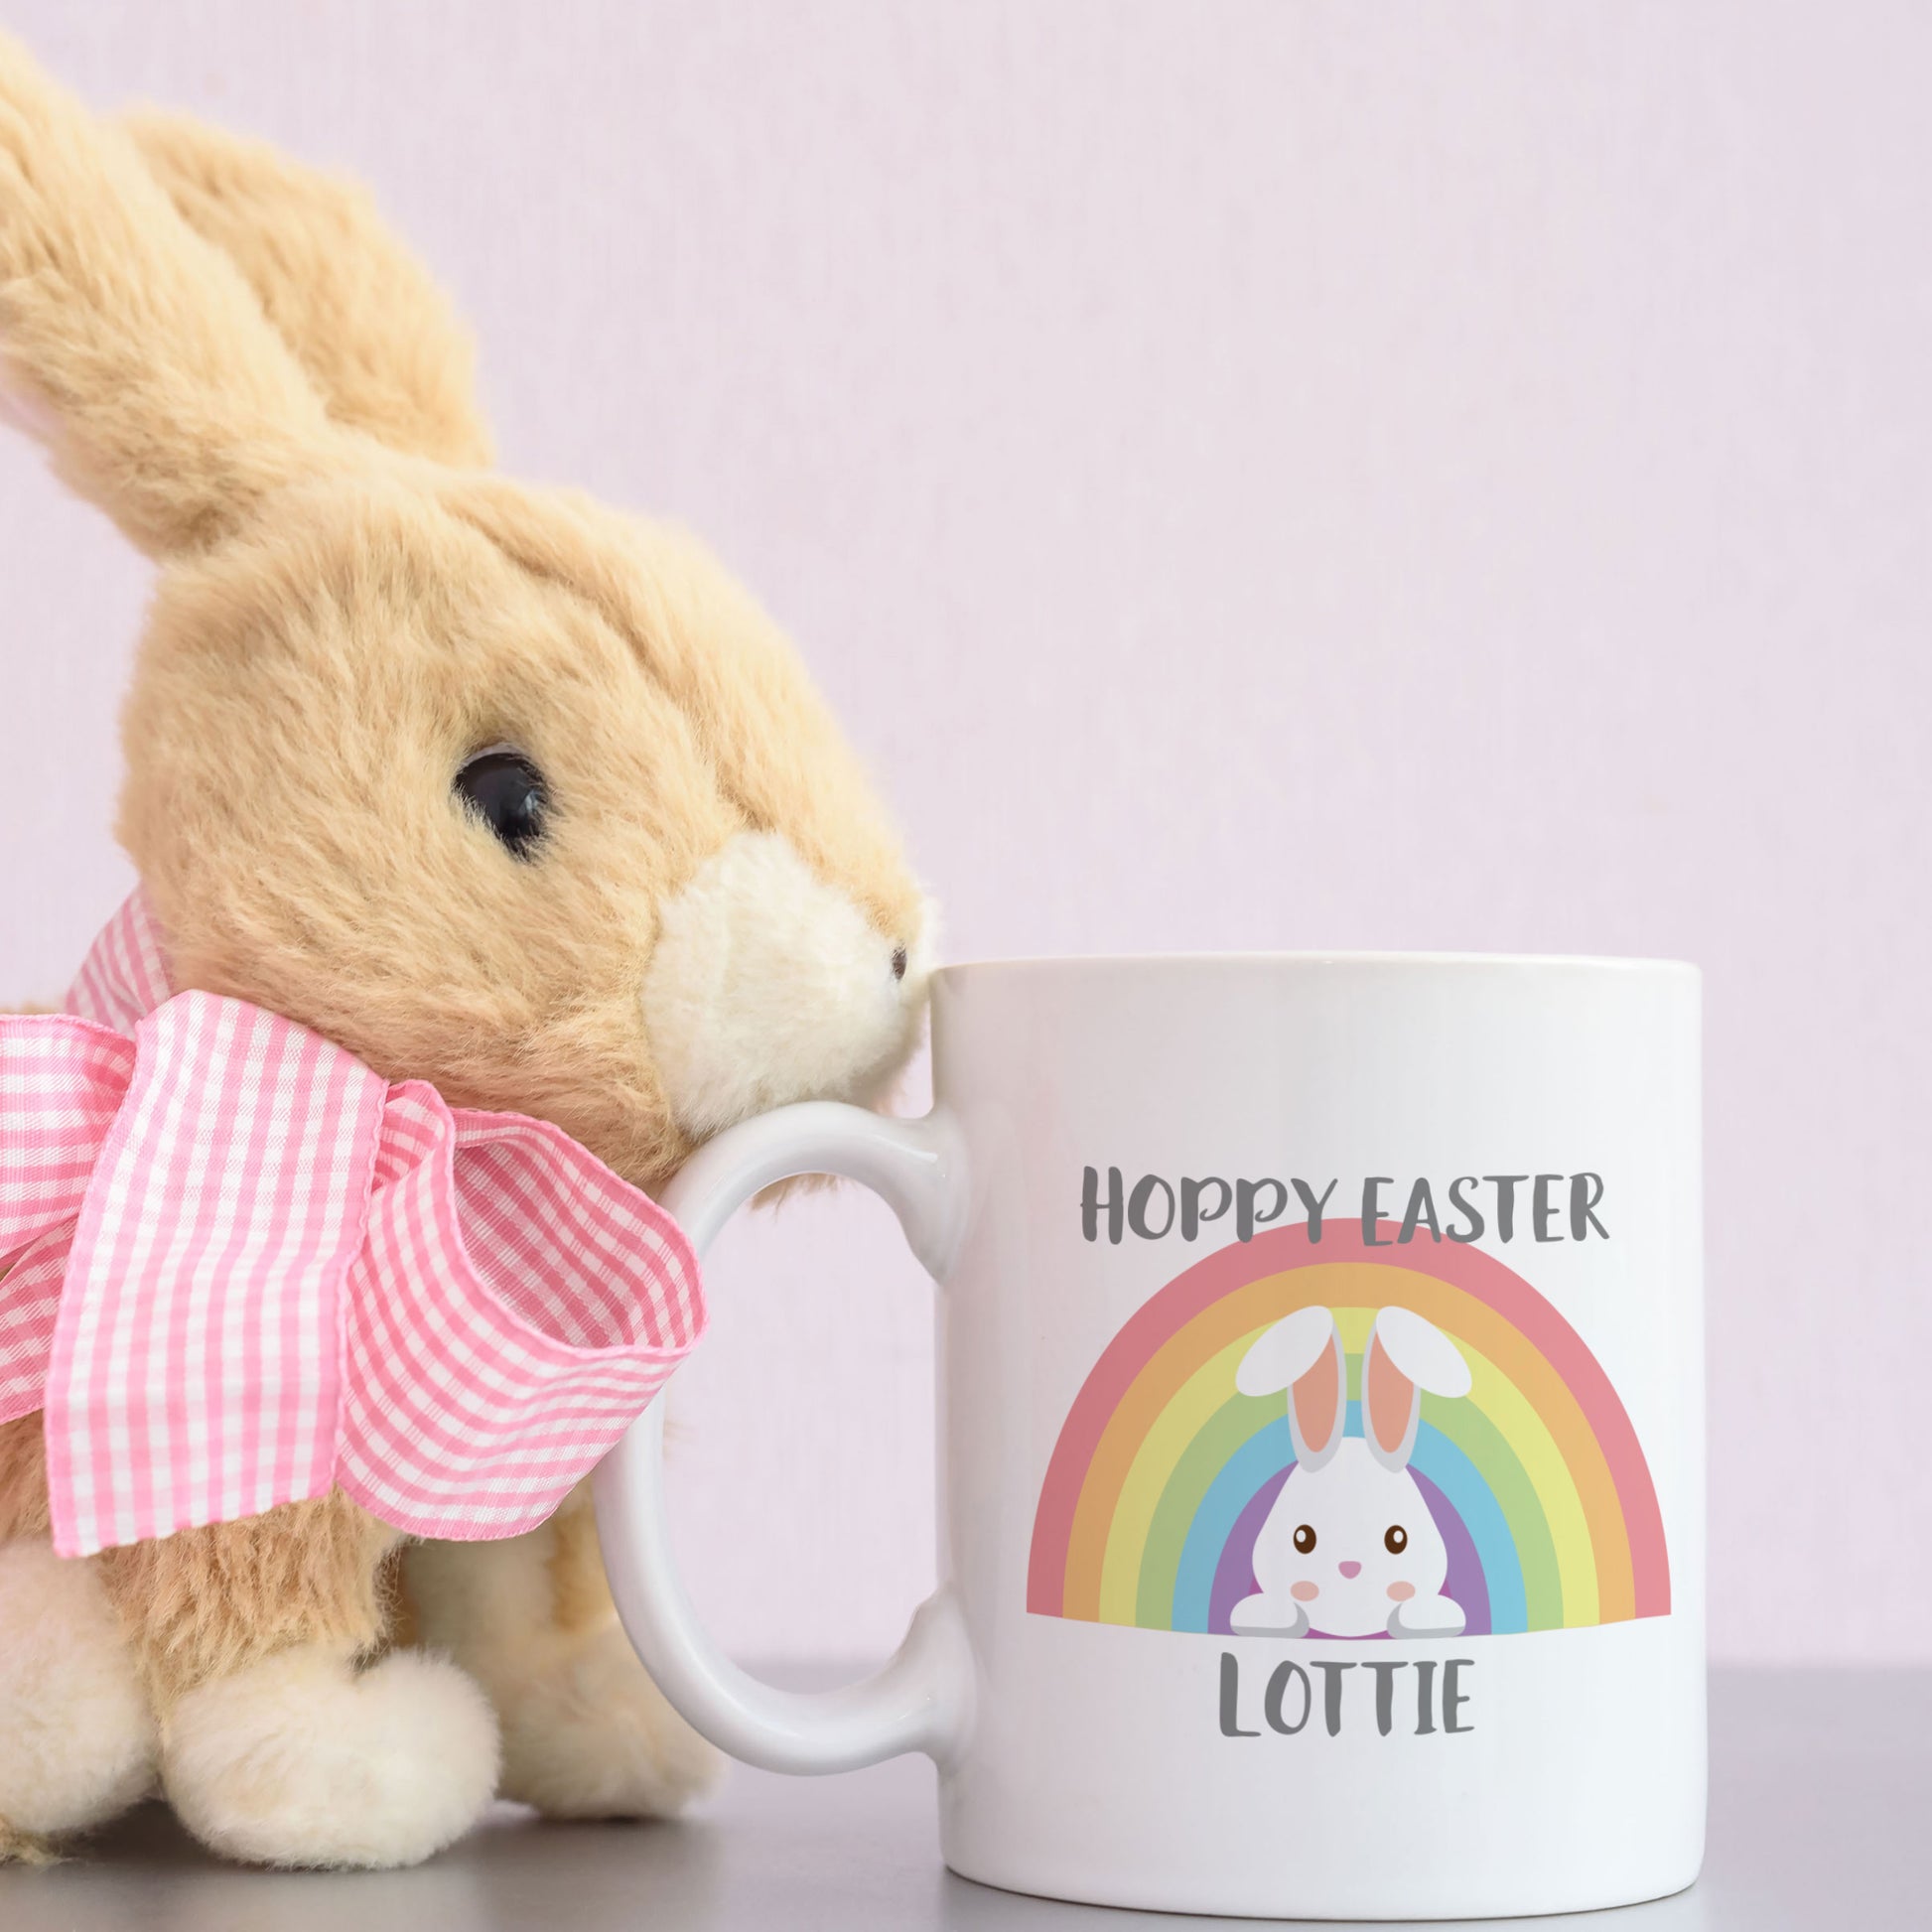 easter mug for child with rainbow and bunny design